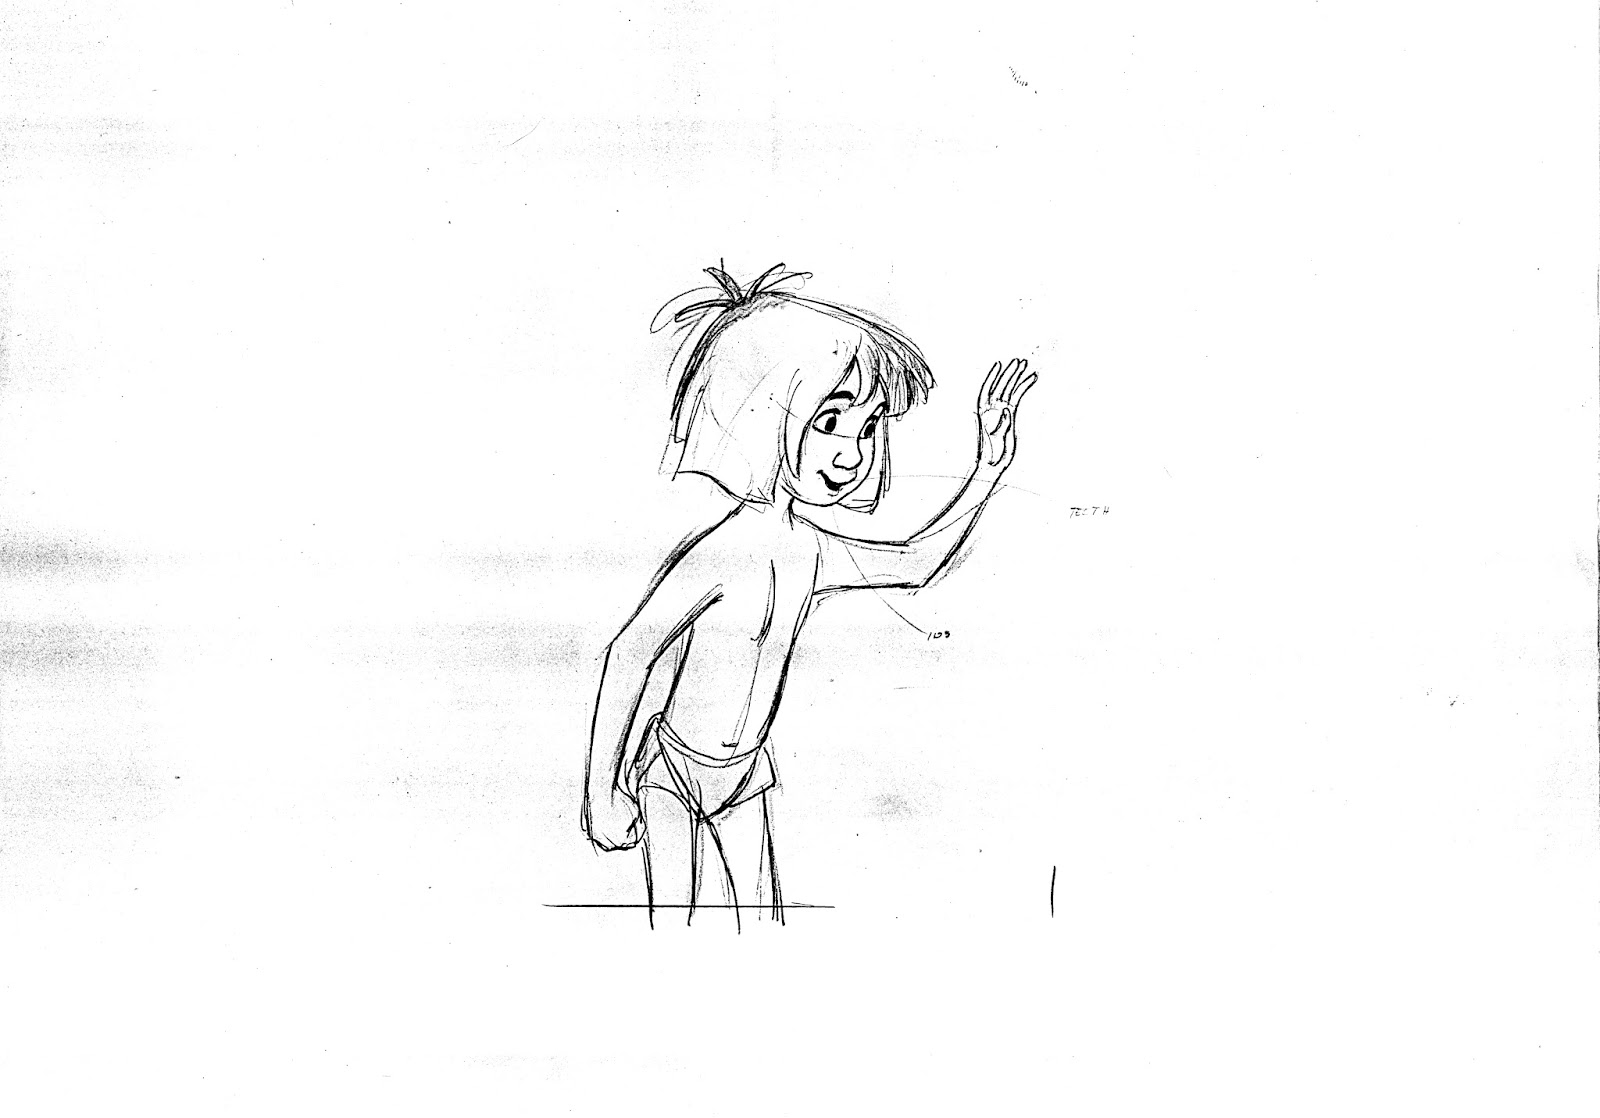 Mowgli - Sketches by LinaHoshi on DeviantArt